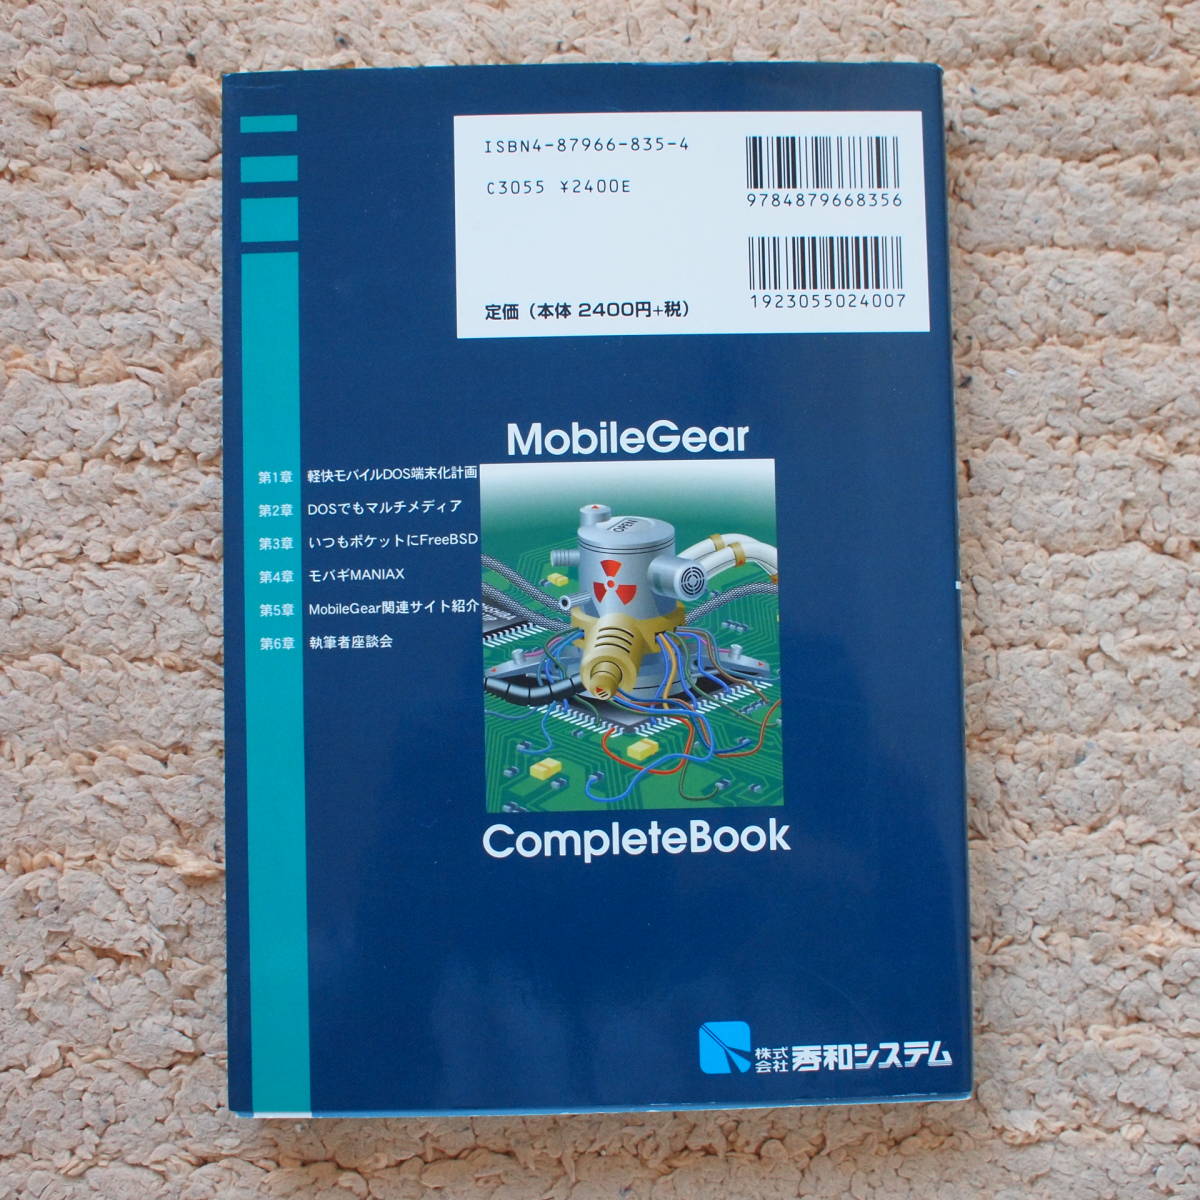 MOBILE GEAR COMPLETE BOOK　佐久間 浩一、T. Ogasawara、河上 遊 (著)　DOSモバ　必携本〈CD-ROMなし〉